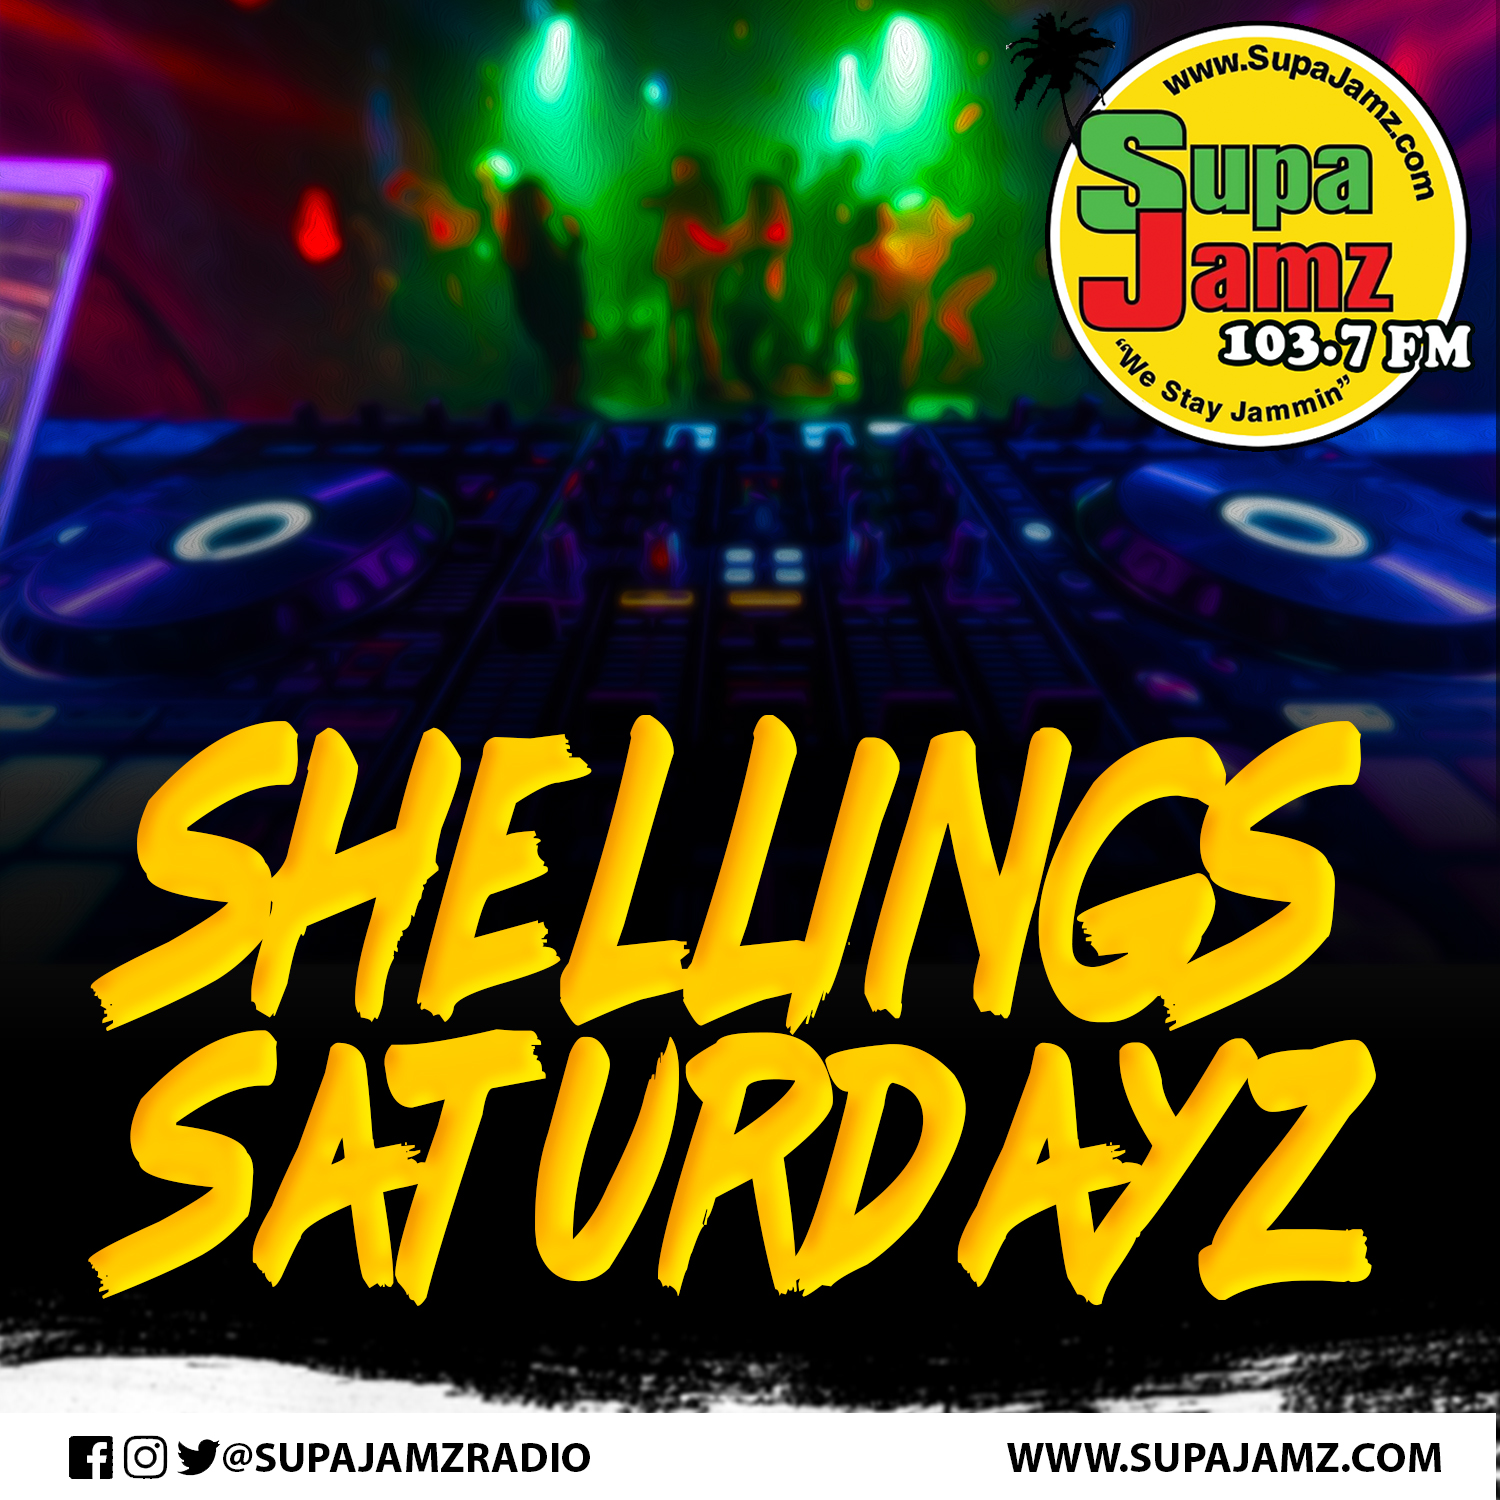 Shellingz Saturday Mix